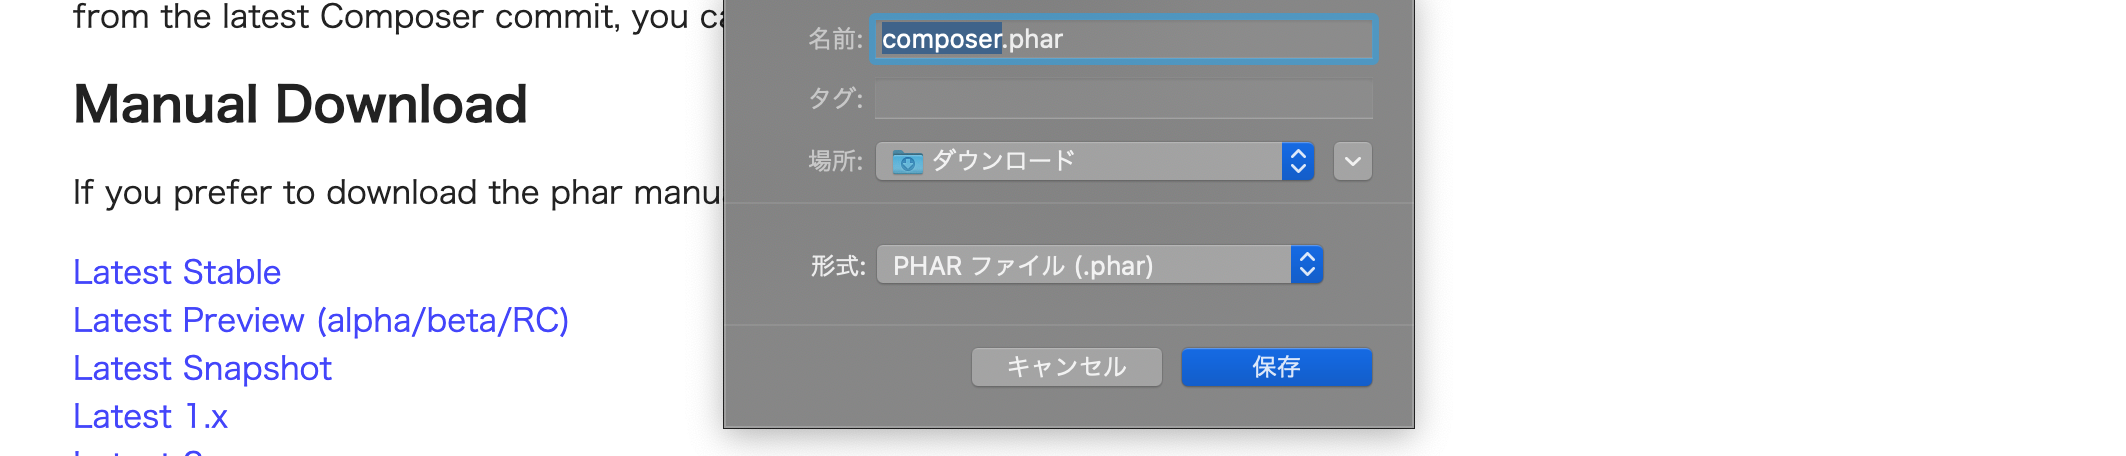 composer download